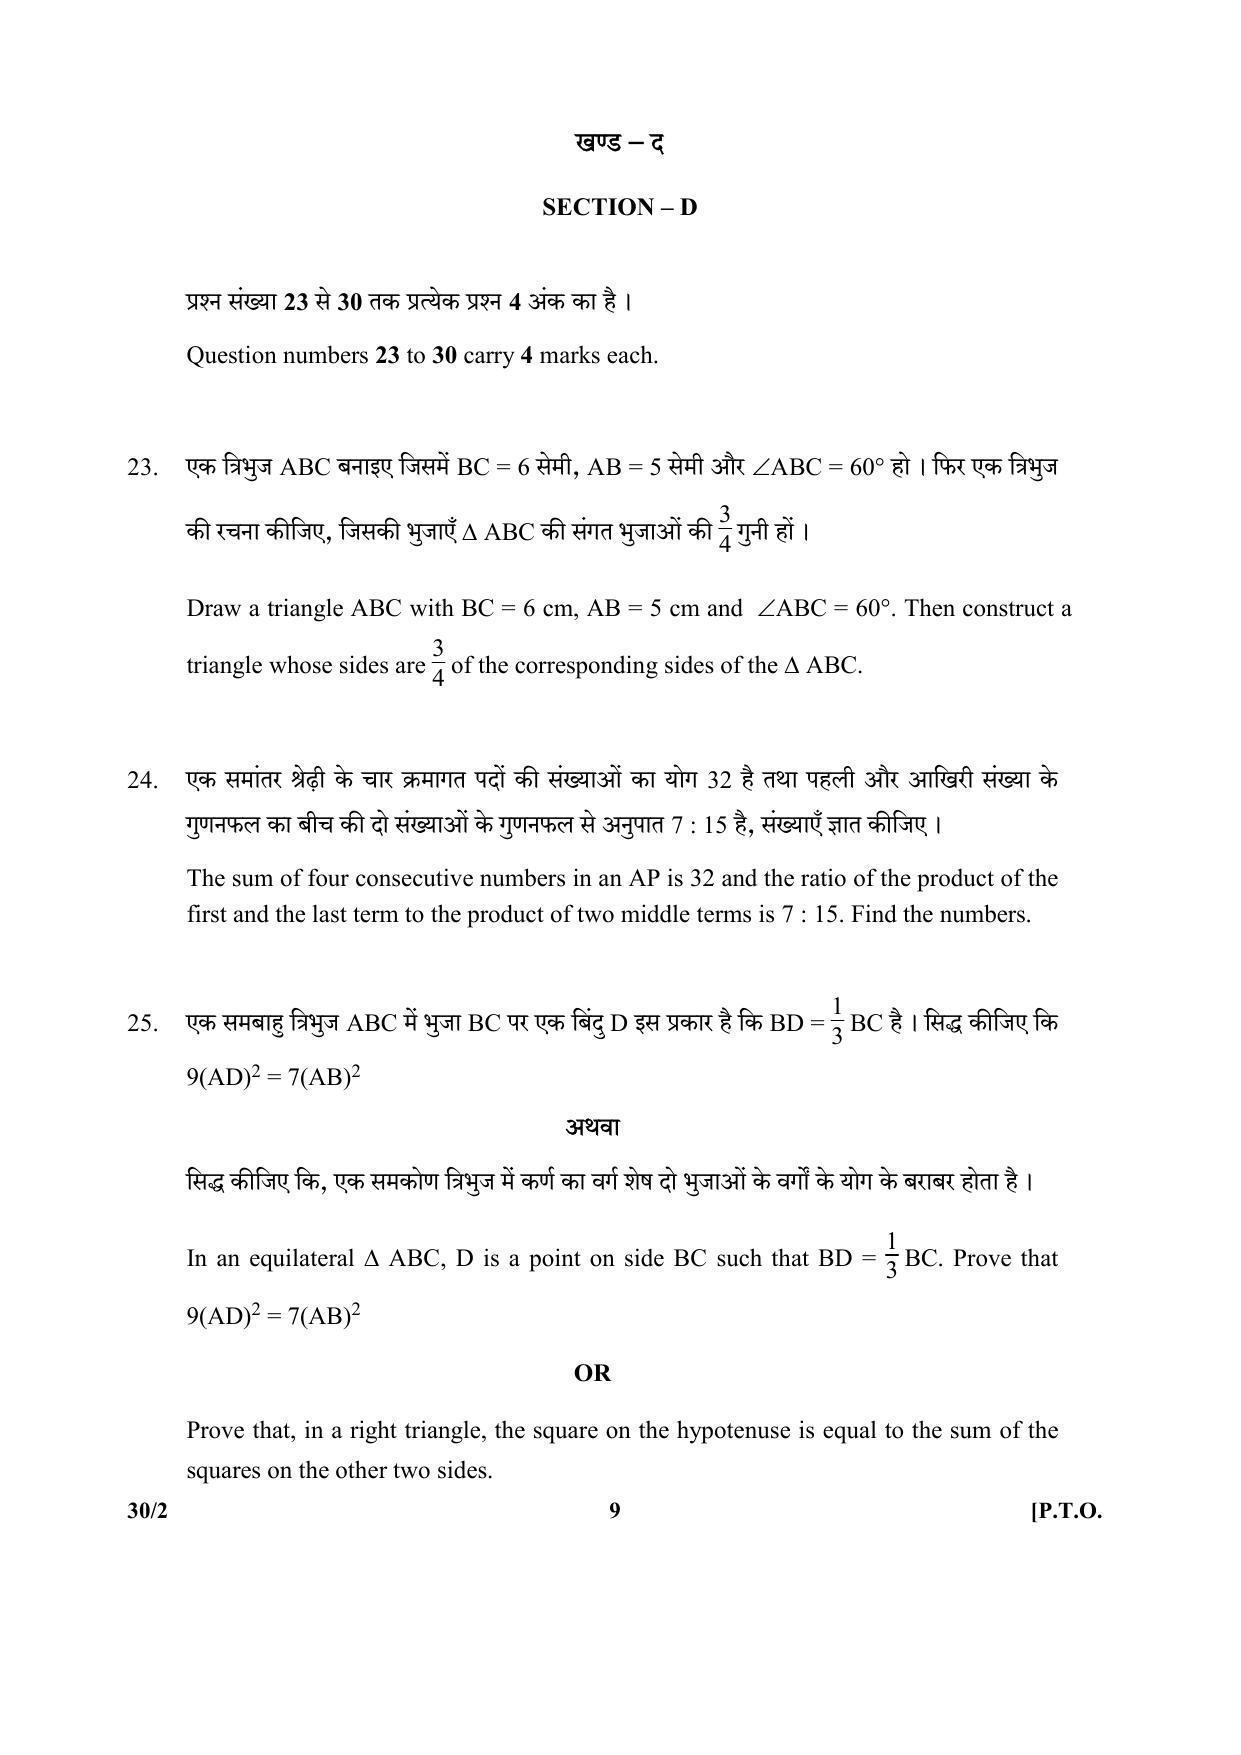 CBSE Class 10 30-2 SET-2 (Mathematics) 2018 Question Paper - Page 9